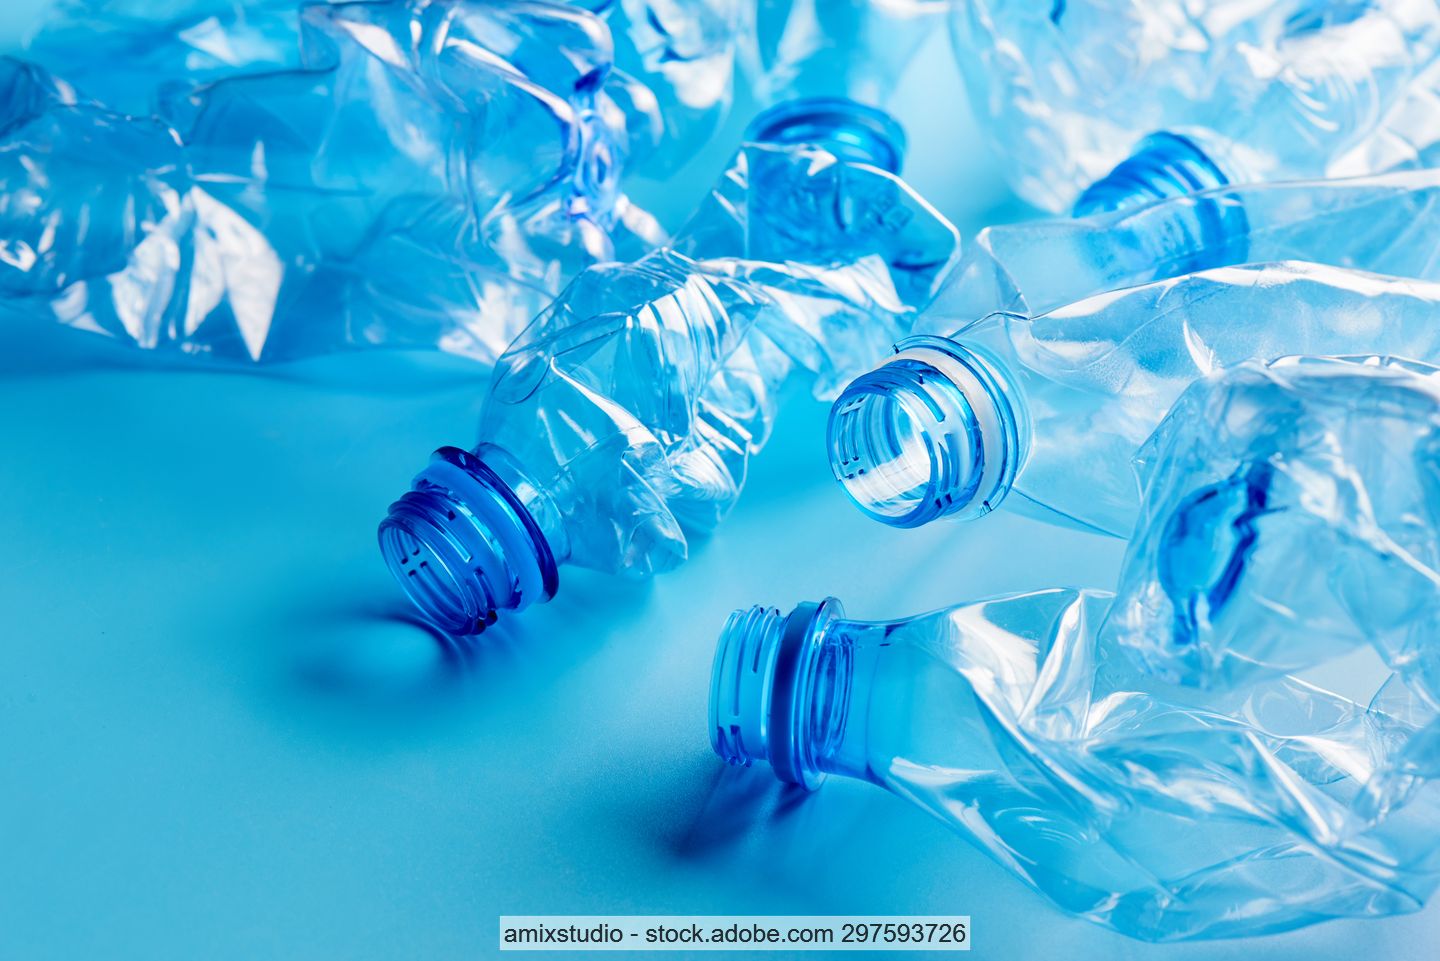 PET-Recycling: Preisanstieg flacht im Februar etwas ab